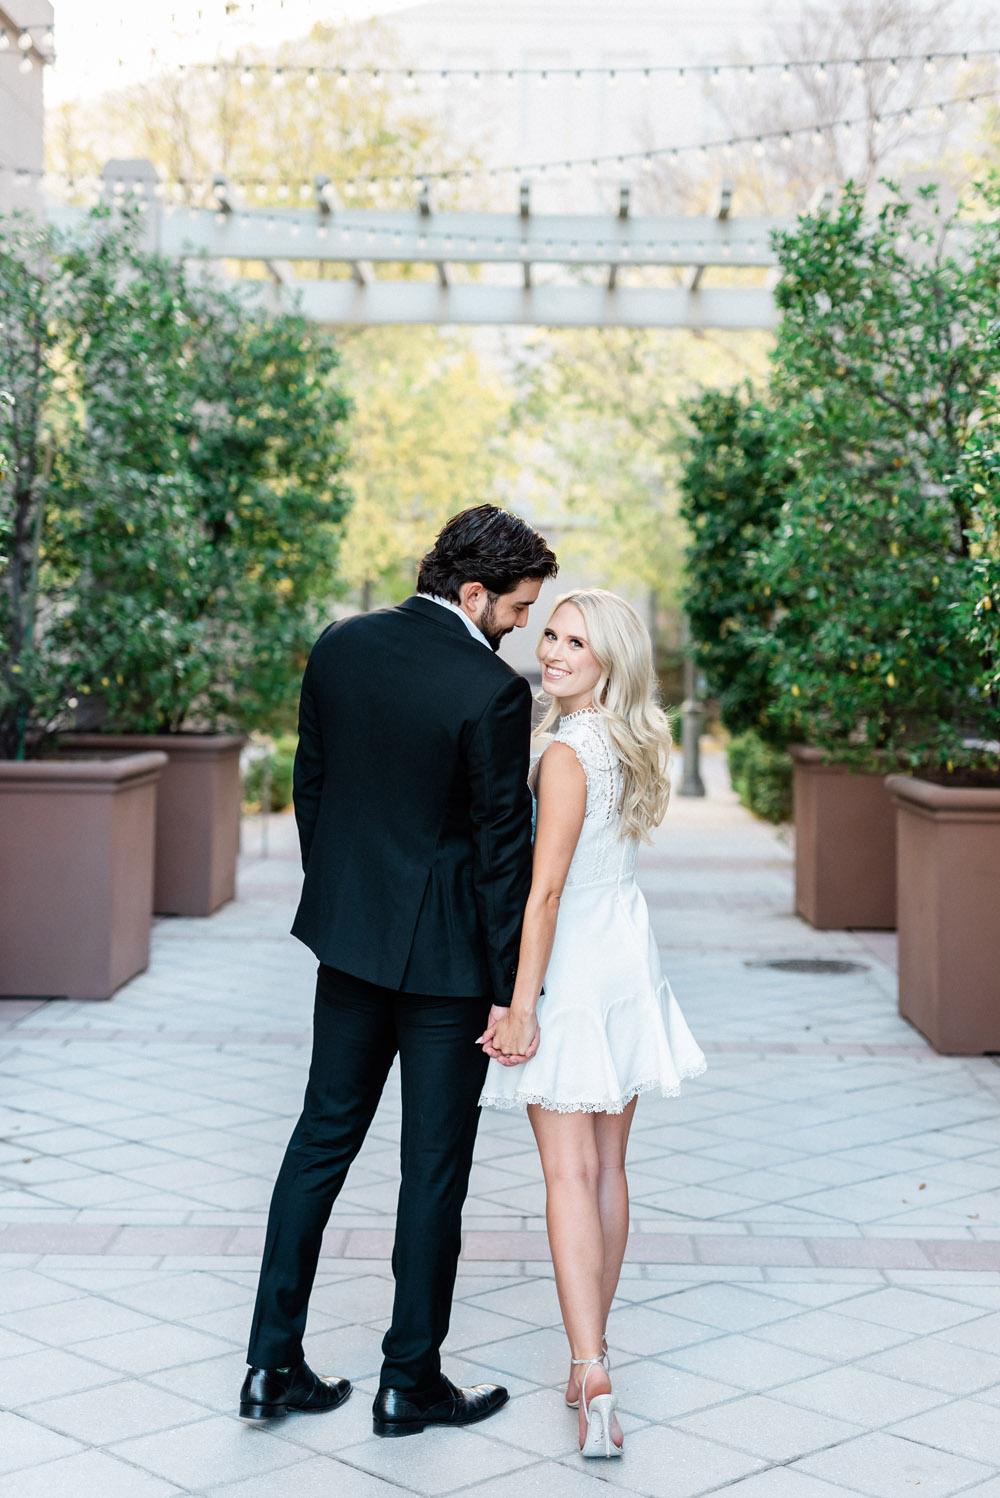 Smith Center Engagement Session Photography | Kristen Marie Weddings + Portraits, Las Vegas Wedding Photographer